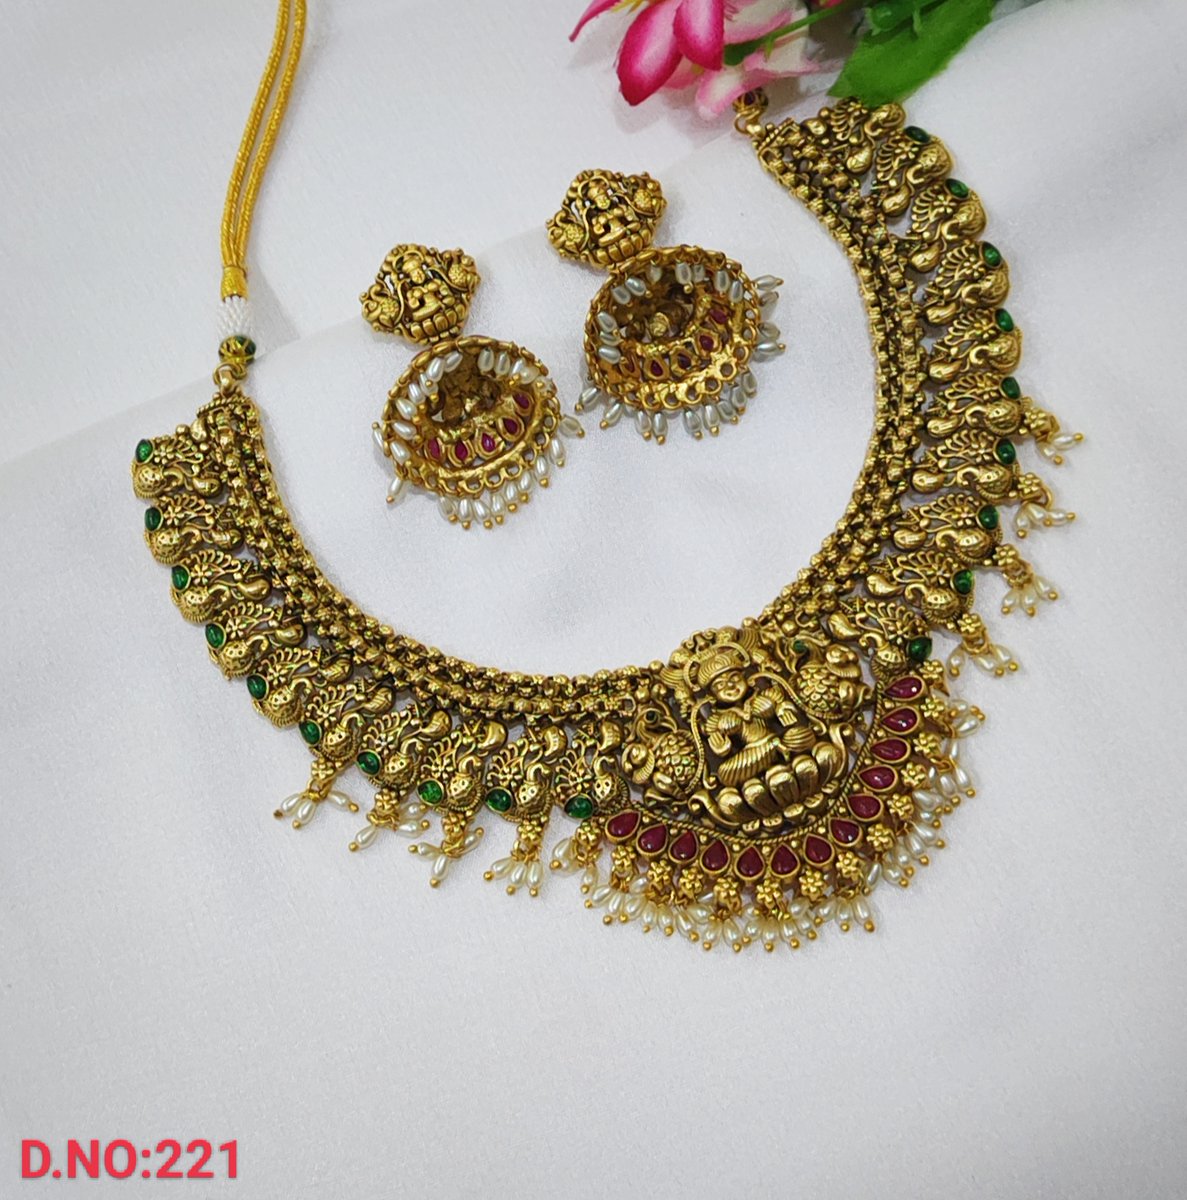 Laxmi Sri Art Jewellery - Short Necklace Set

#necklace #shortnecklace #mattnecklace #goldpolishnecklace #imitationjewelry